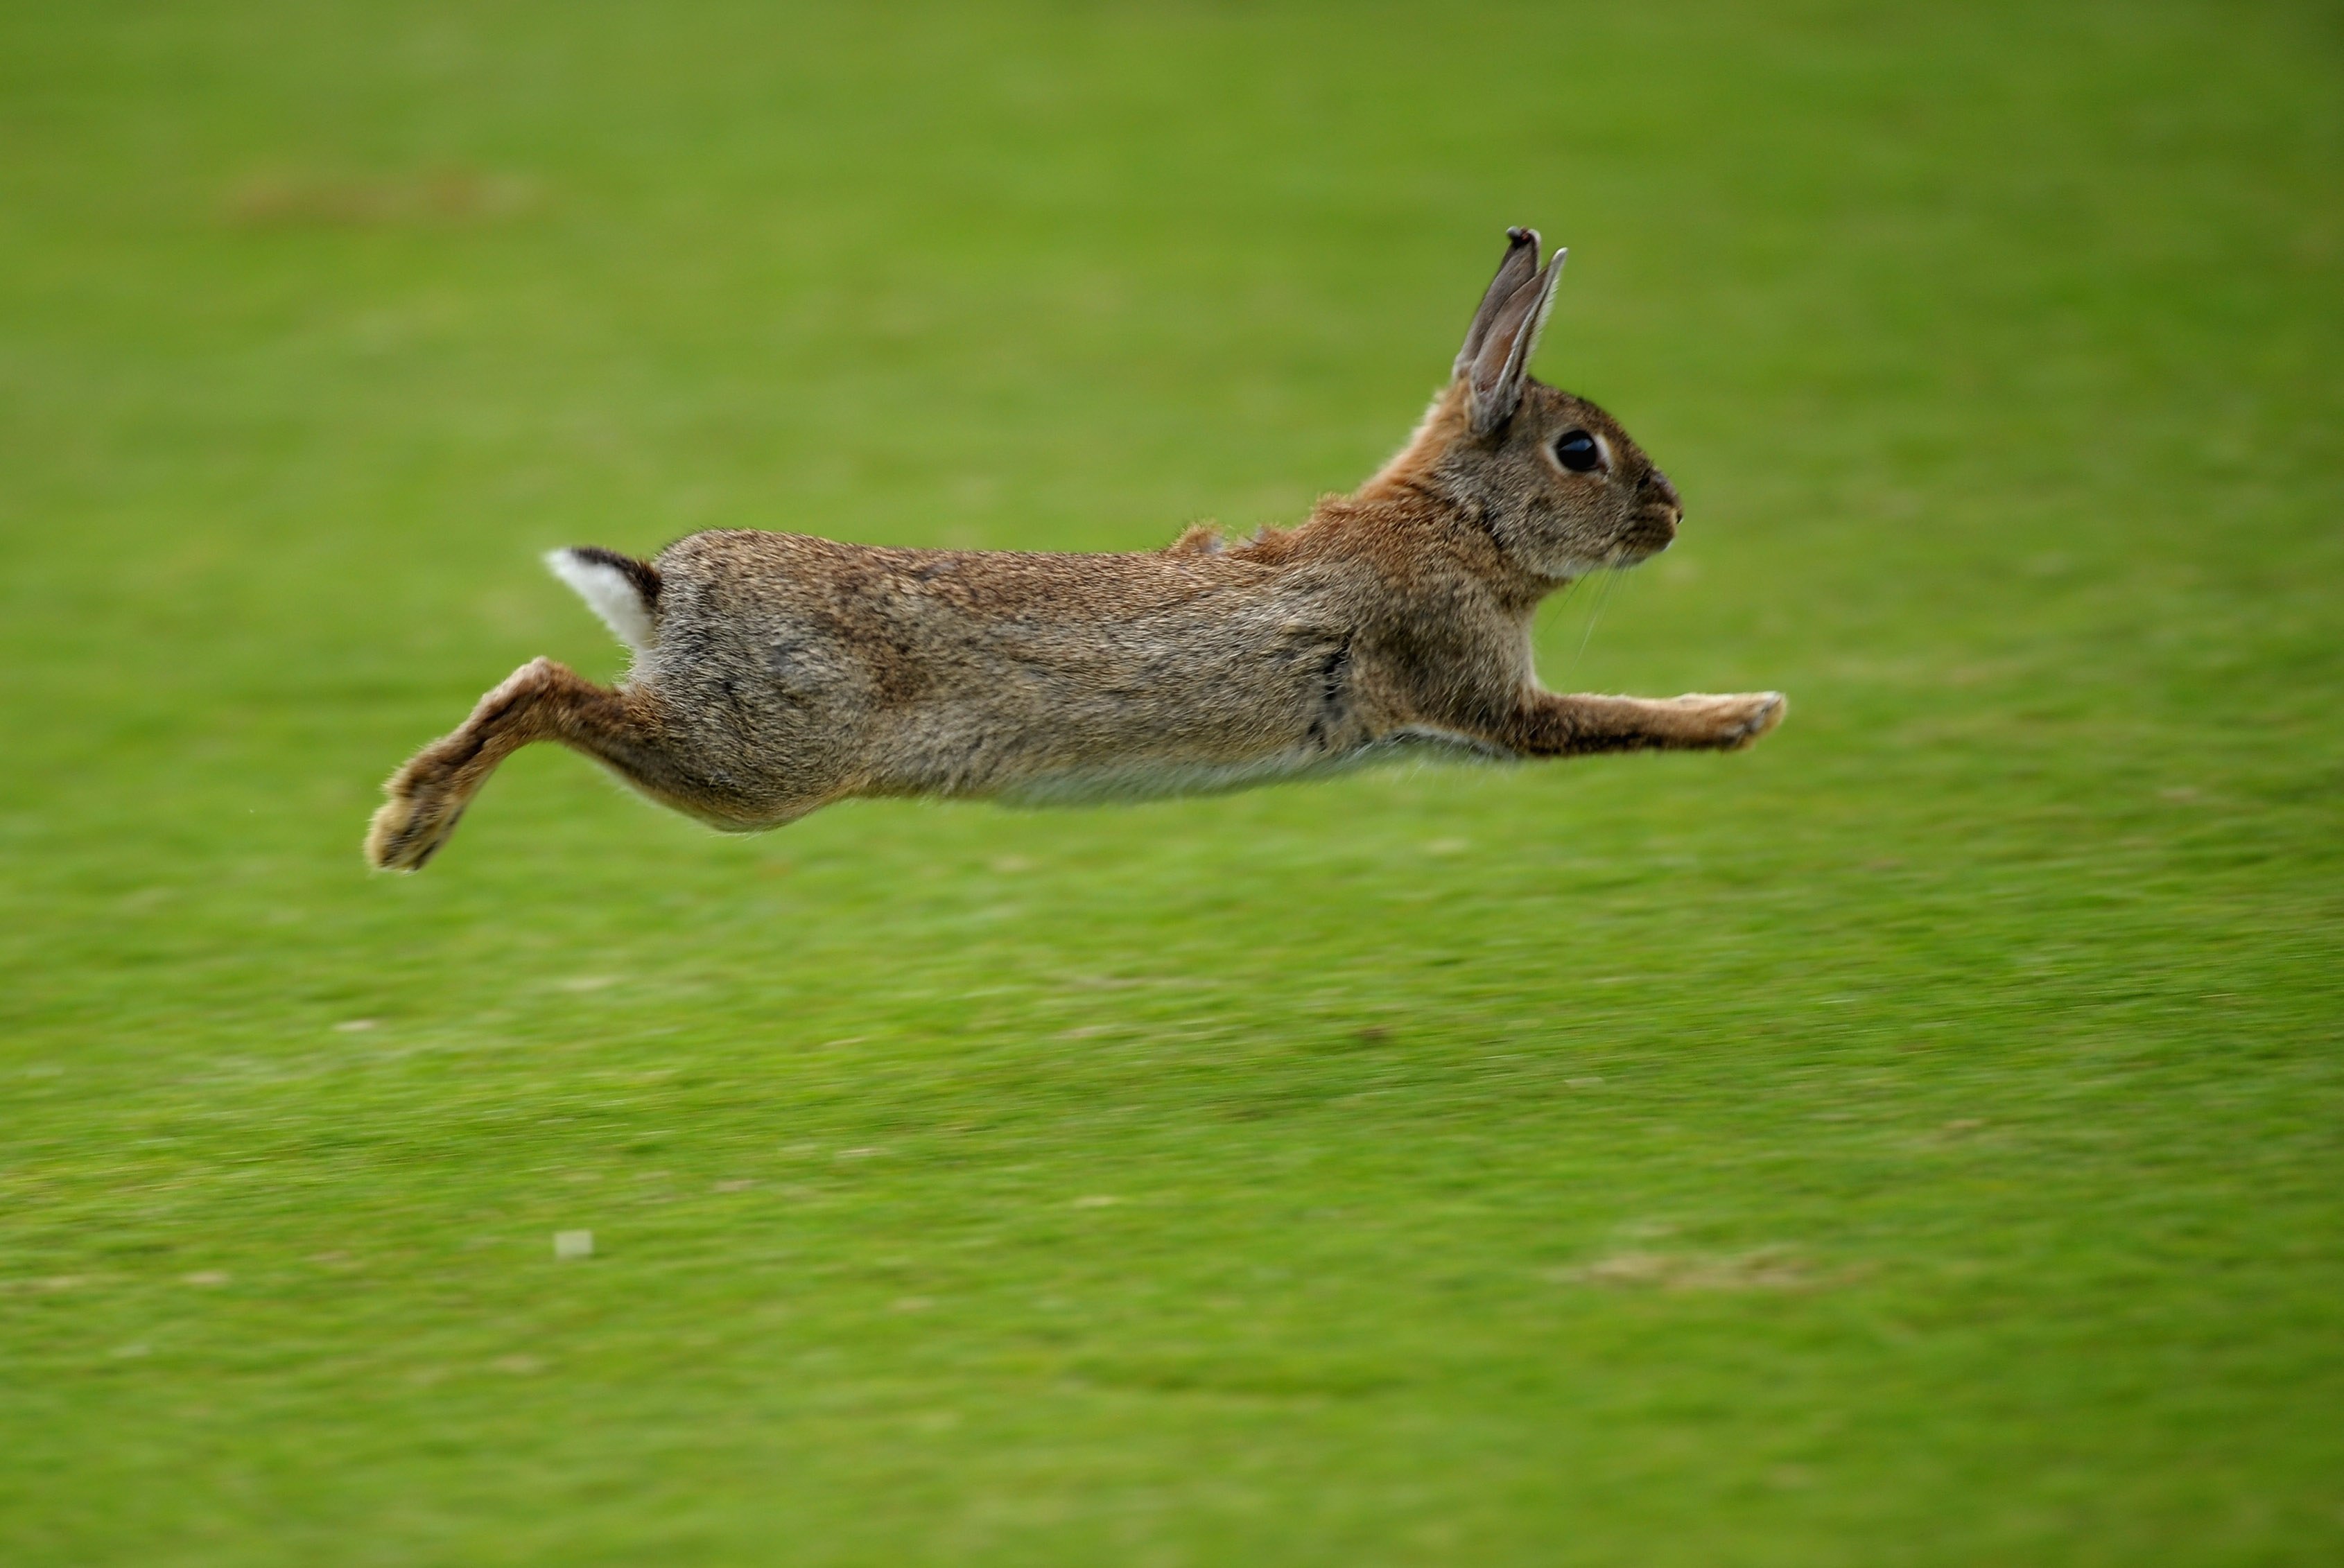 Зайчик убегает. Заяц Русак бежит. Заяц Русак бег. Хвост зайца русака. Заяц Русак прыгает.